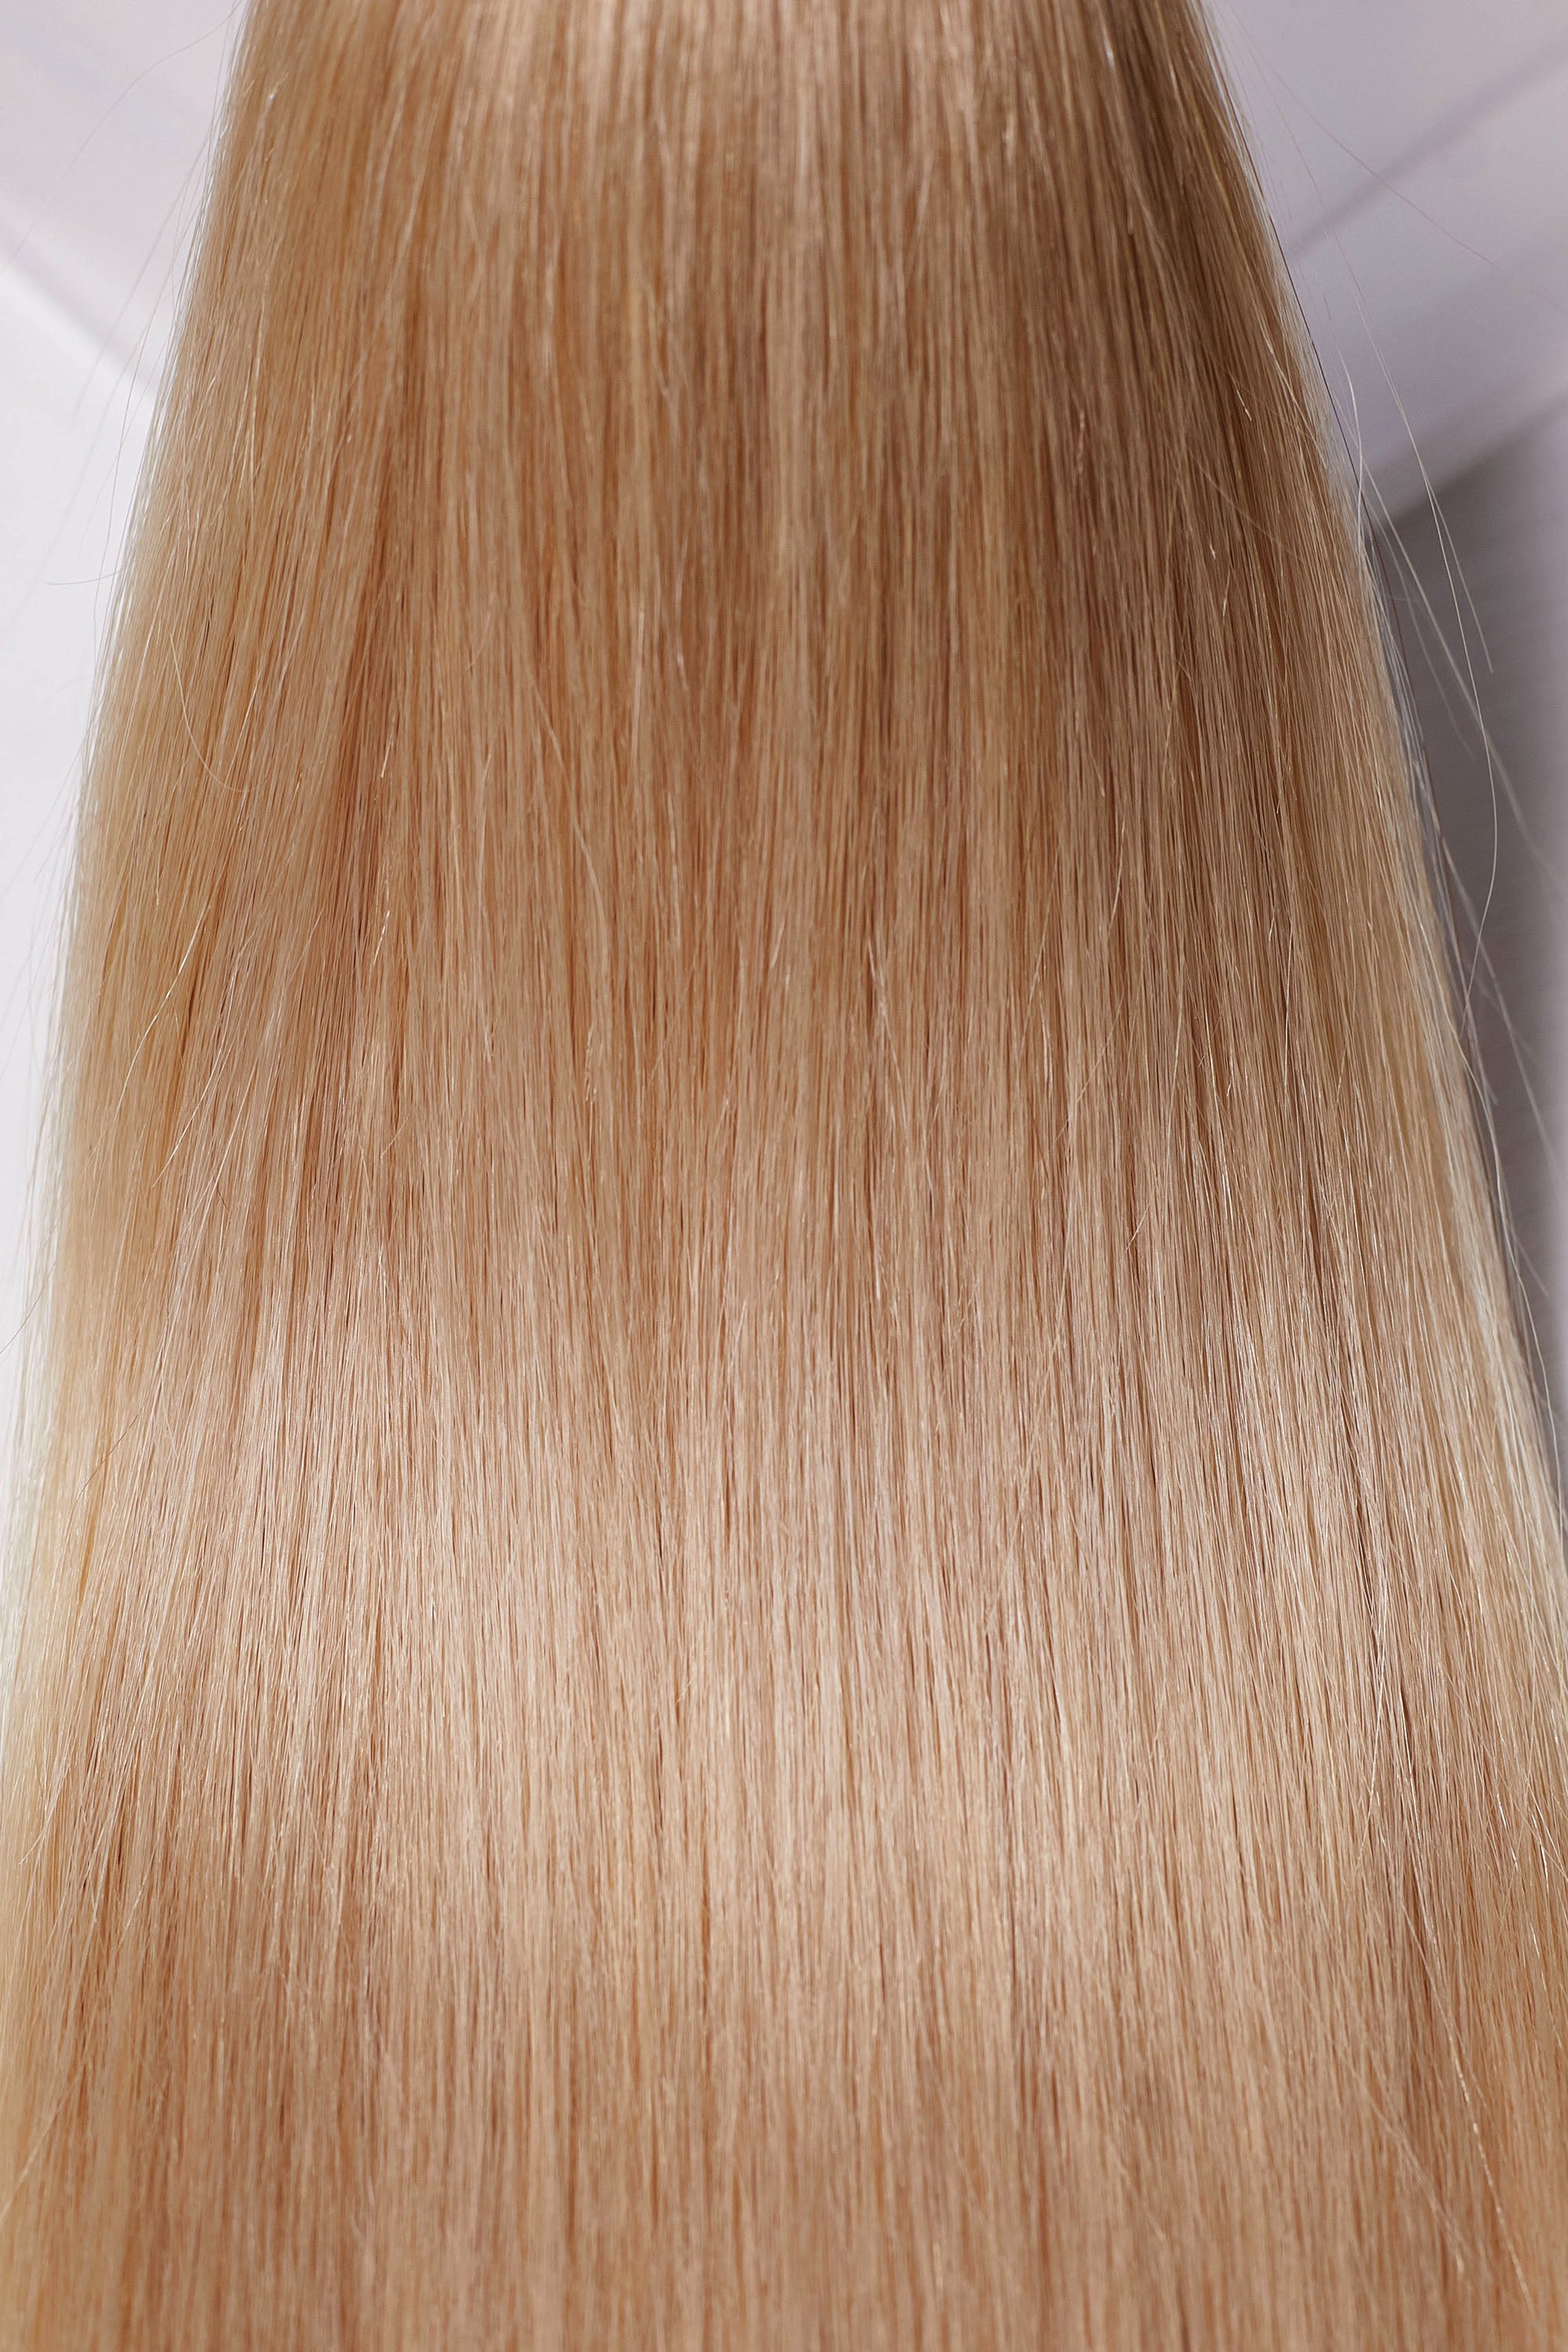 Behair professional Bulk hair "Premium" 20" (50cm) Natural Straight Light Gold Sand #16 - 25g hair extensions